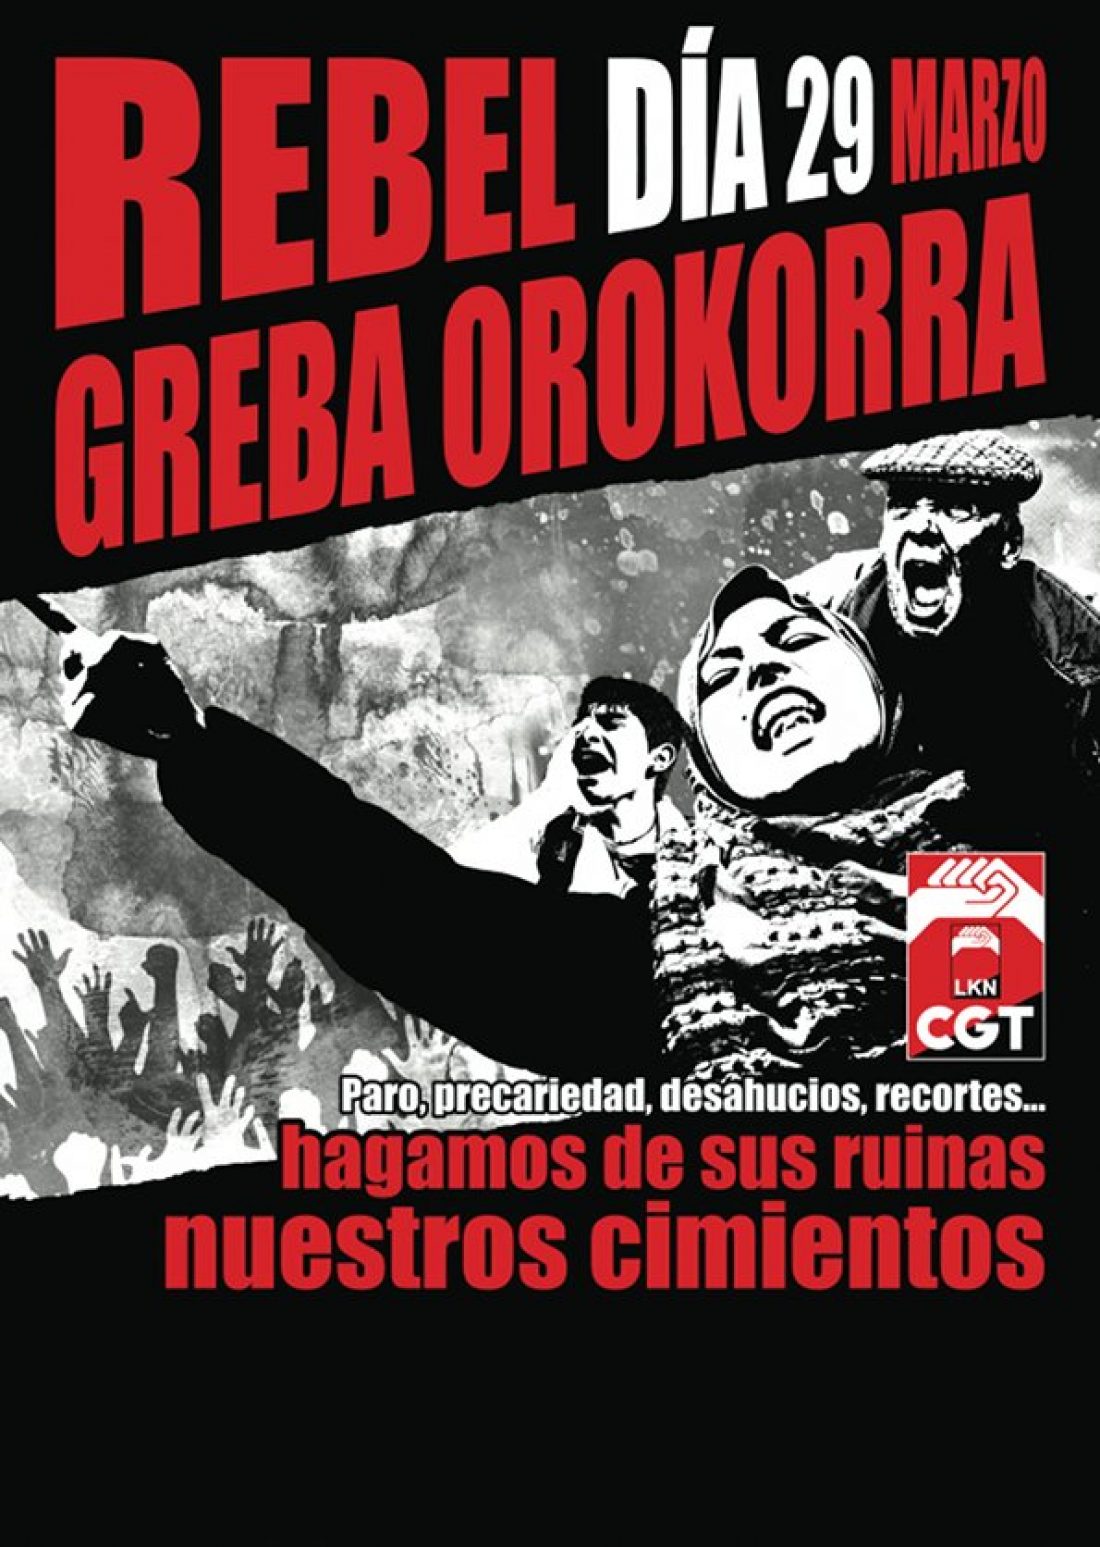 CGT-LKN de Euskadi convoca huelga general el 29 de marzo